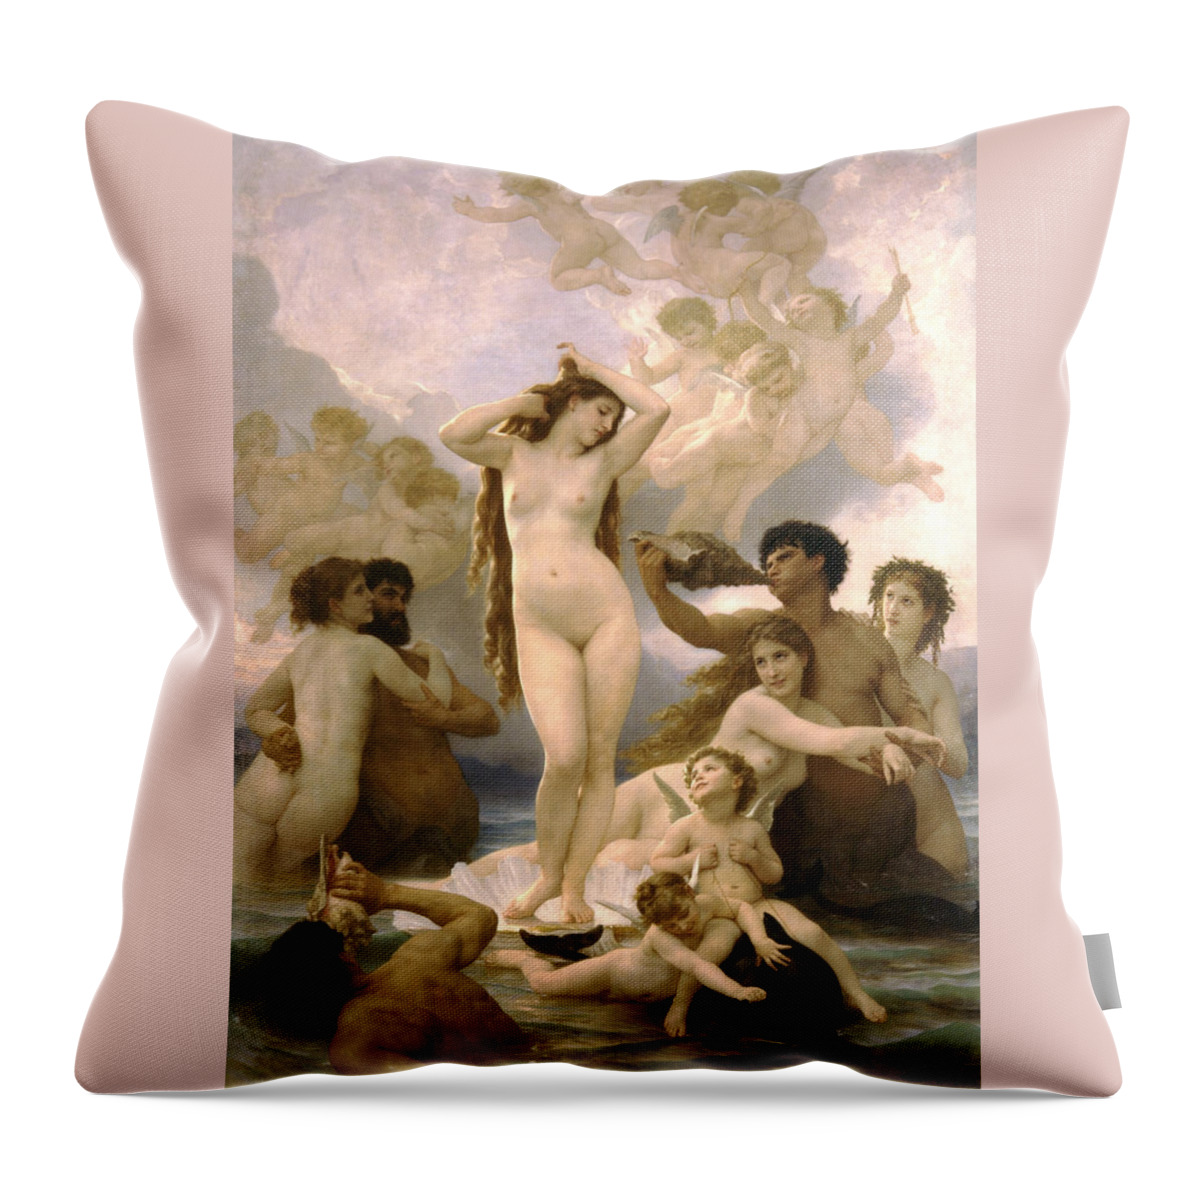 Birth Of Venus Throw Pillow featuring the digital art Birth of Venus by William Bouguereau